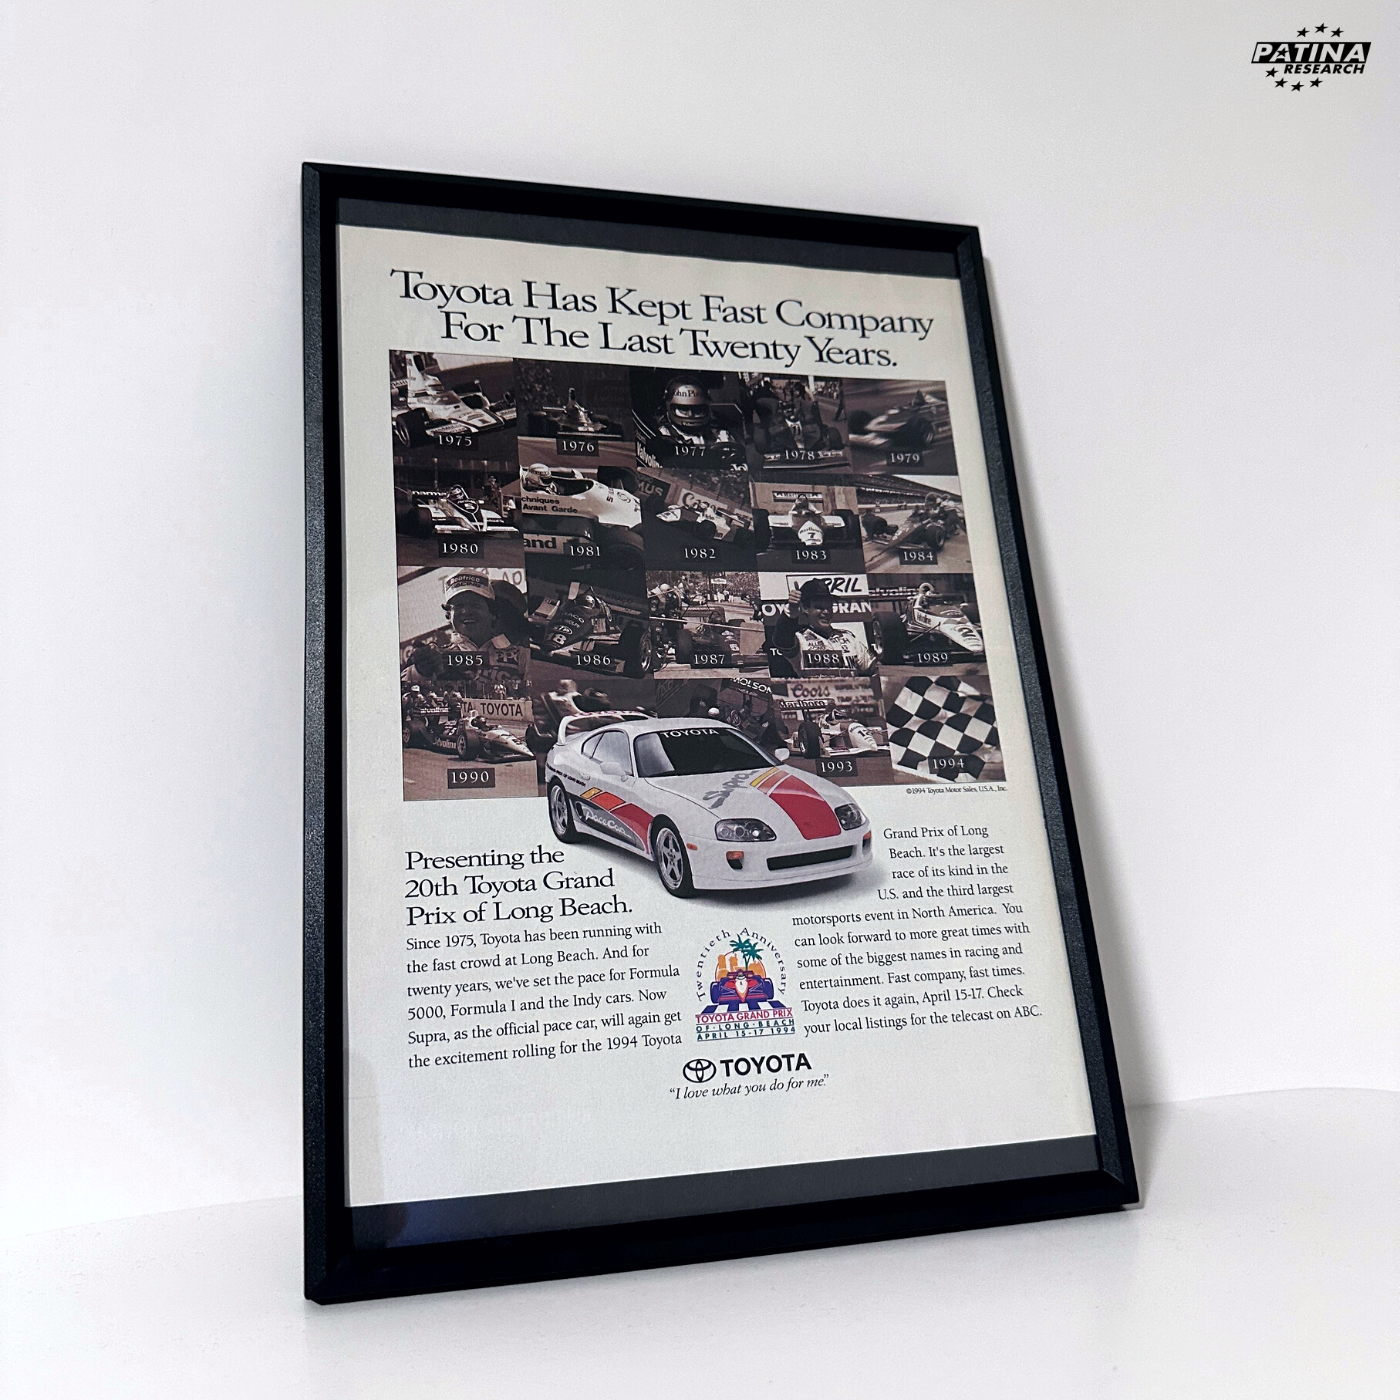 Toyota has kept fast framed ad